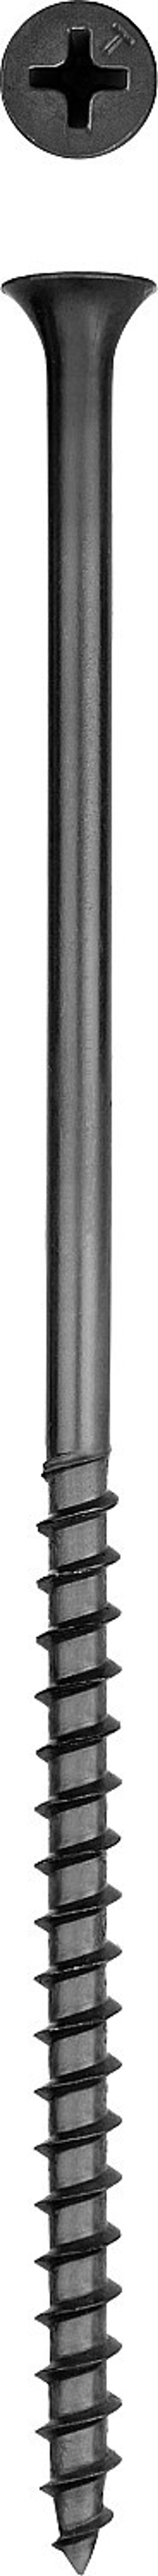 Саморезы СГД гипсокартон-дерево, 125 х 4.8 мм, 400 шт, фосфатированные, KRAFTOOL